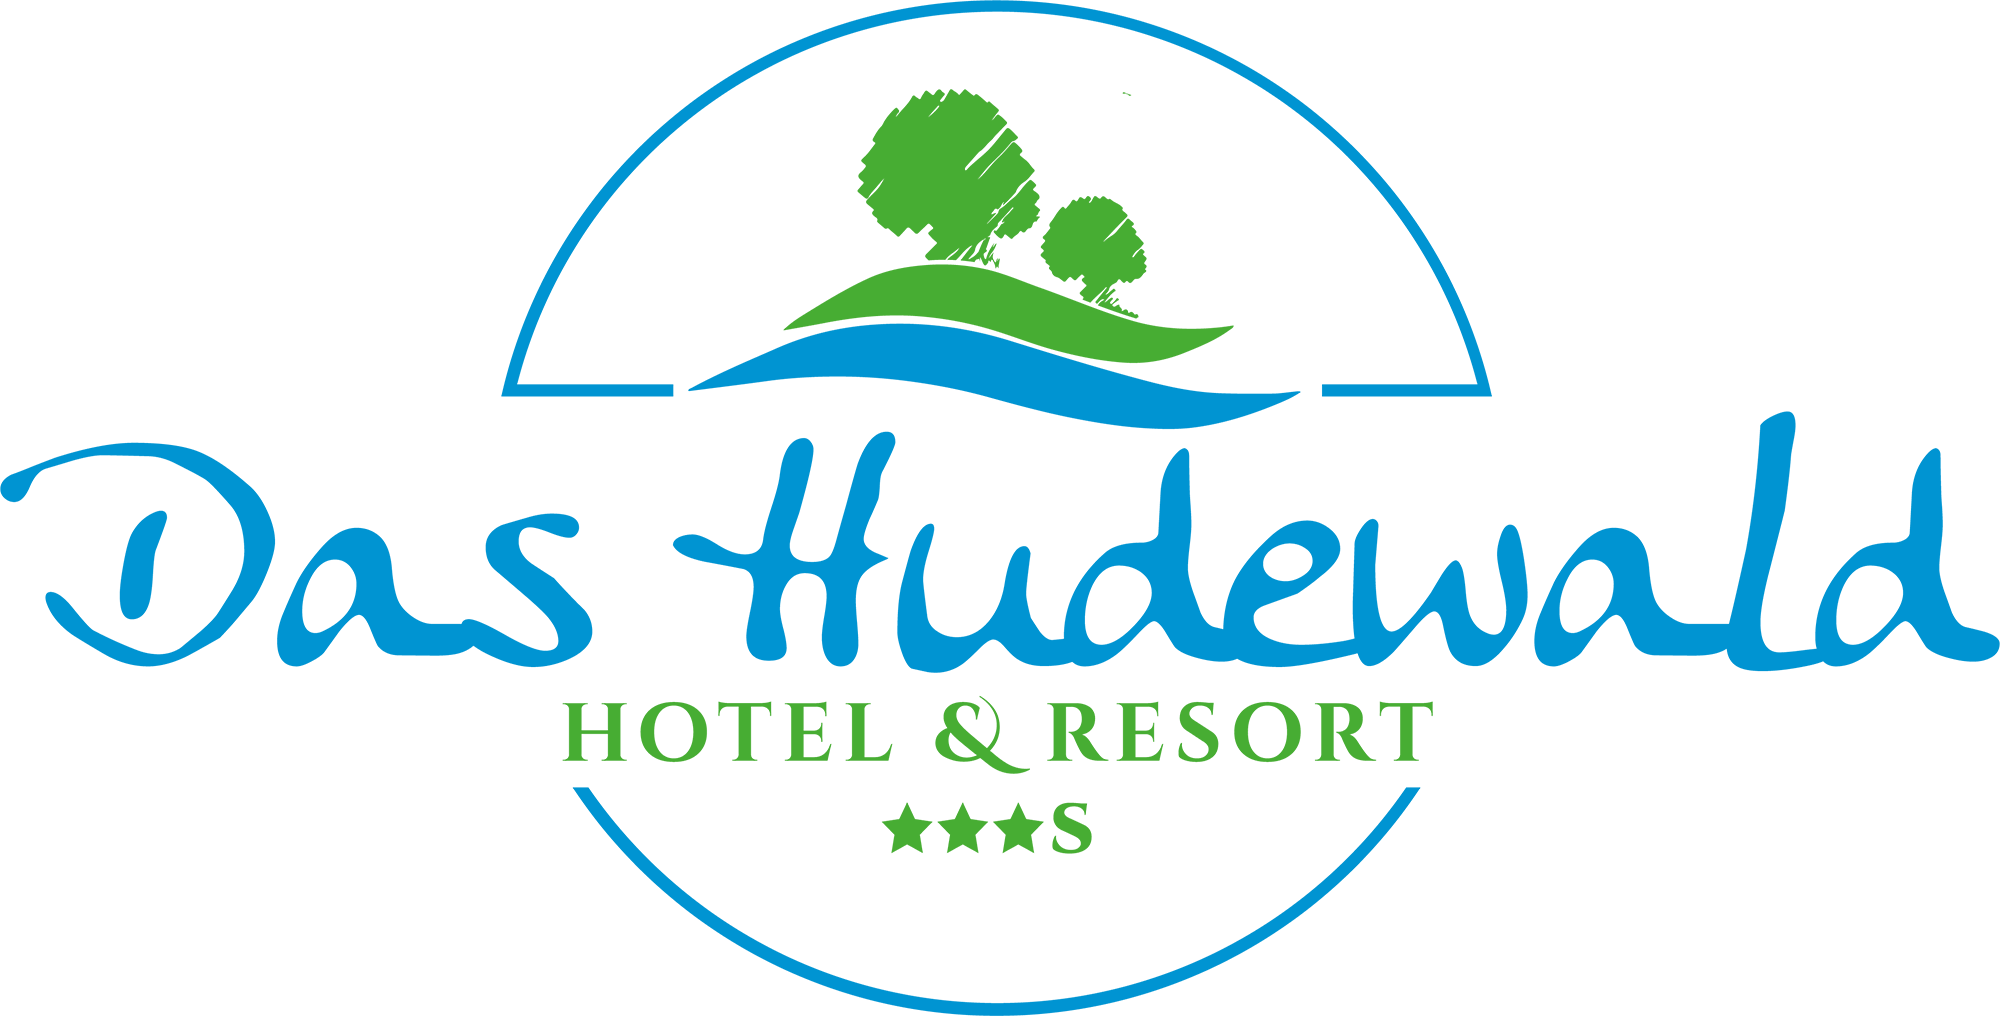 DAS HUDEWALD <br />Hotel & Resort